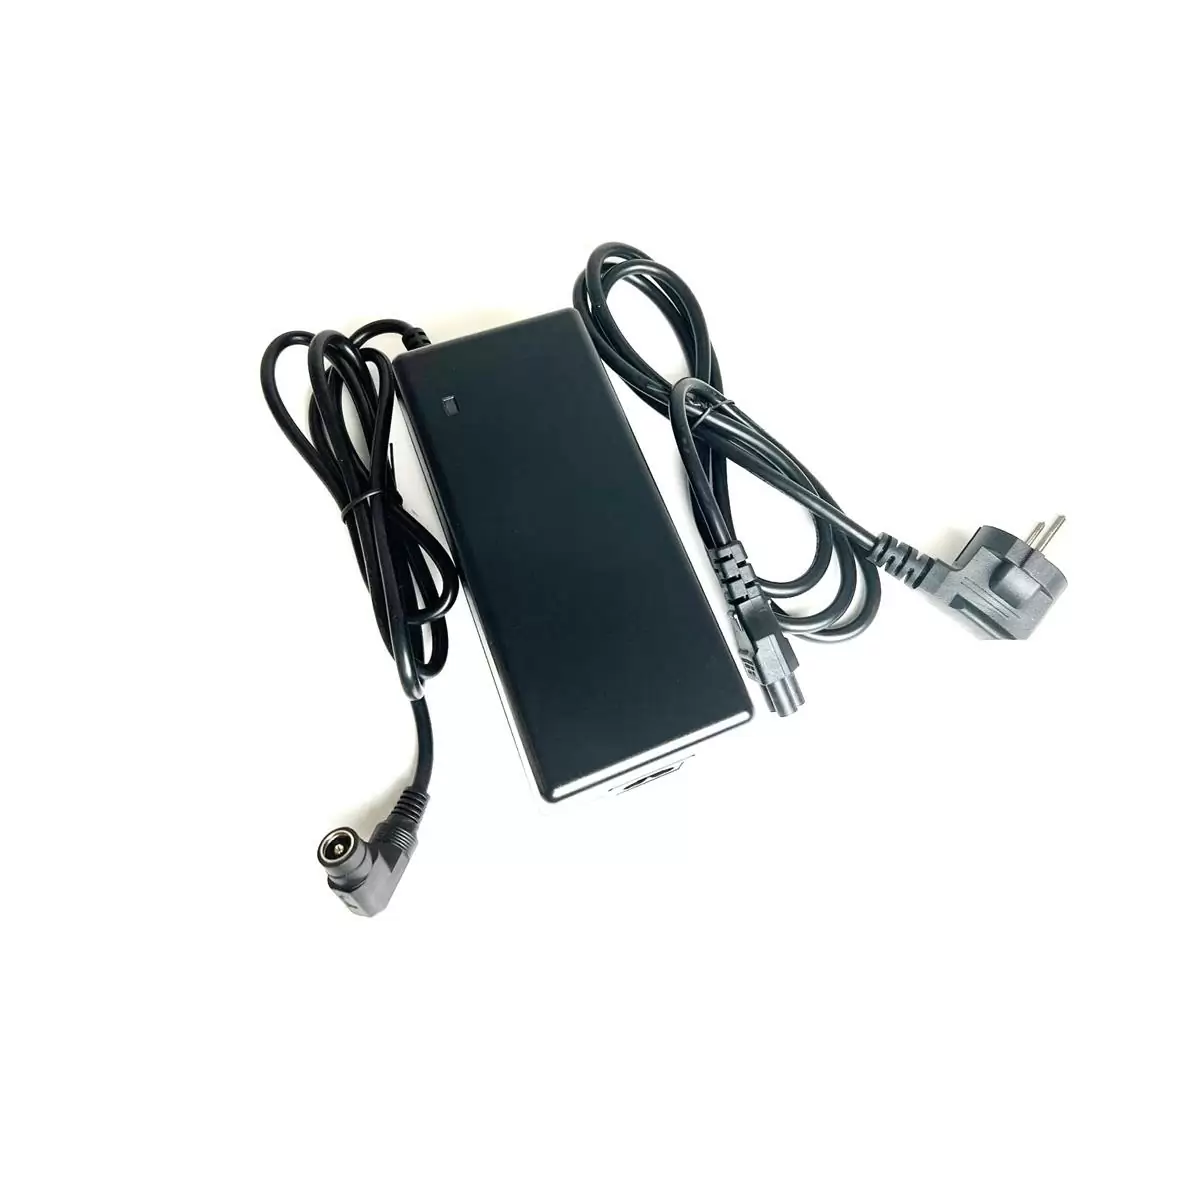 Ebike battery charger 240v for ebike Afrodite T250 - image